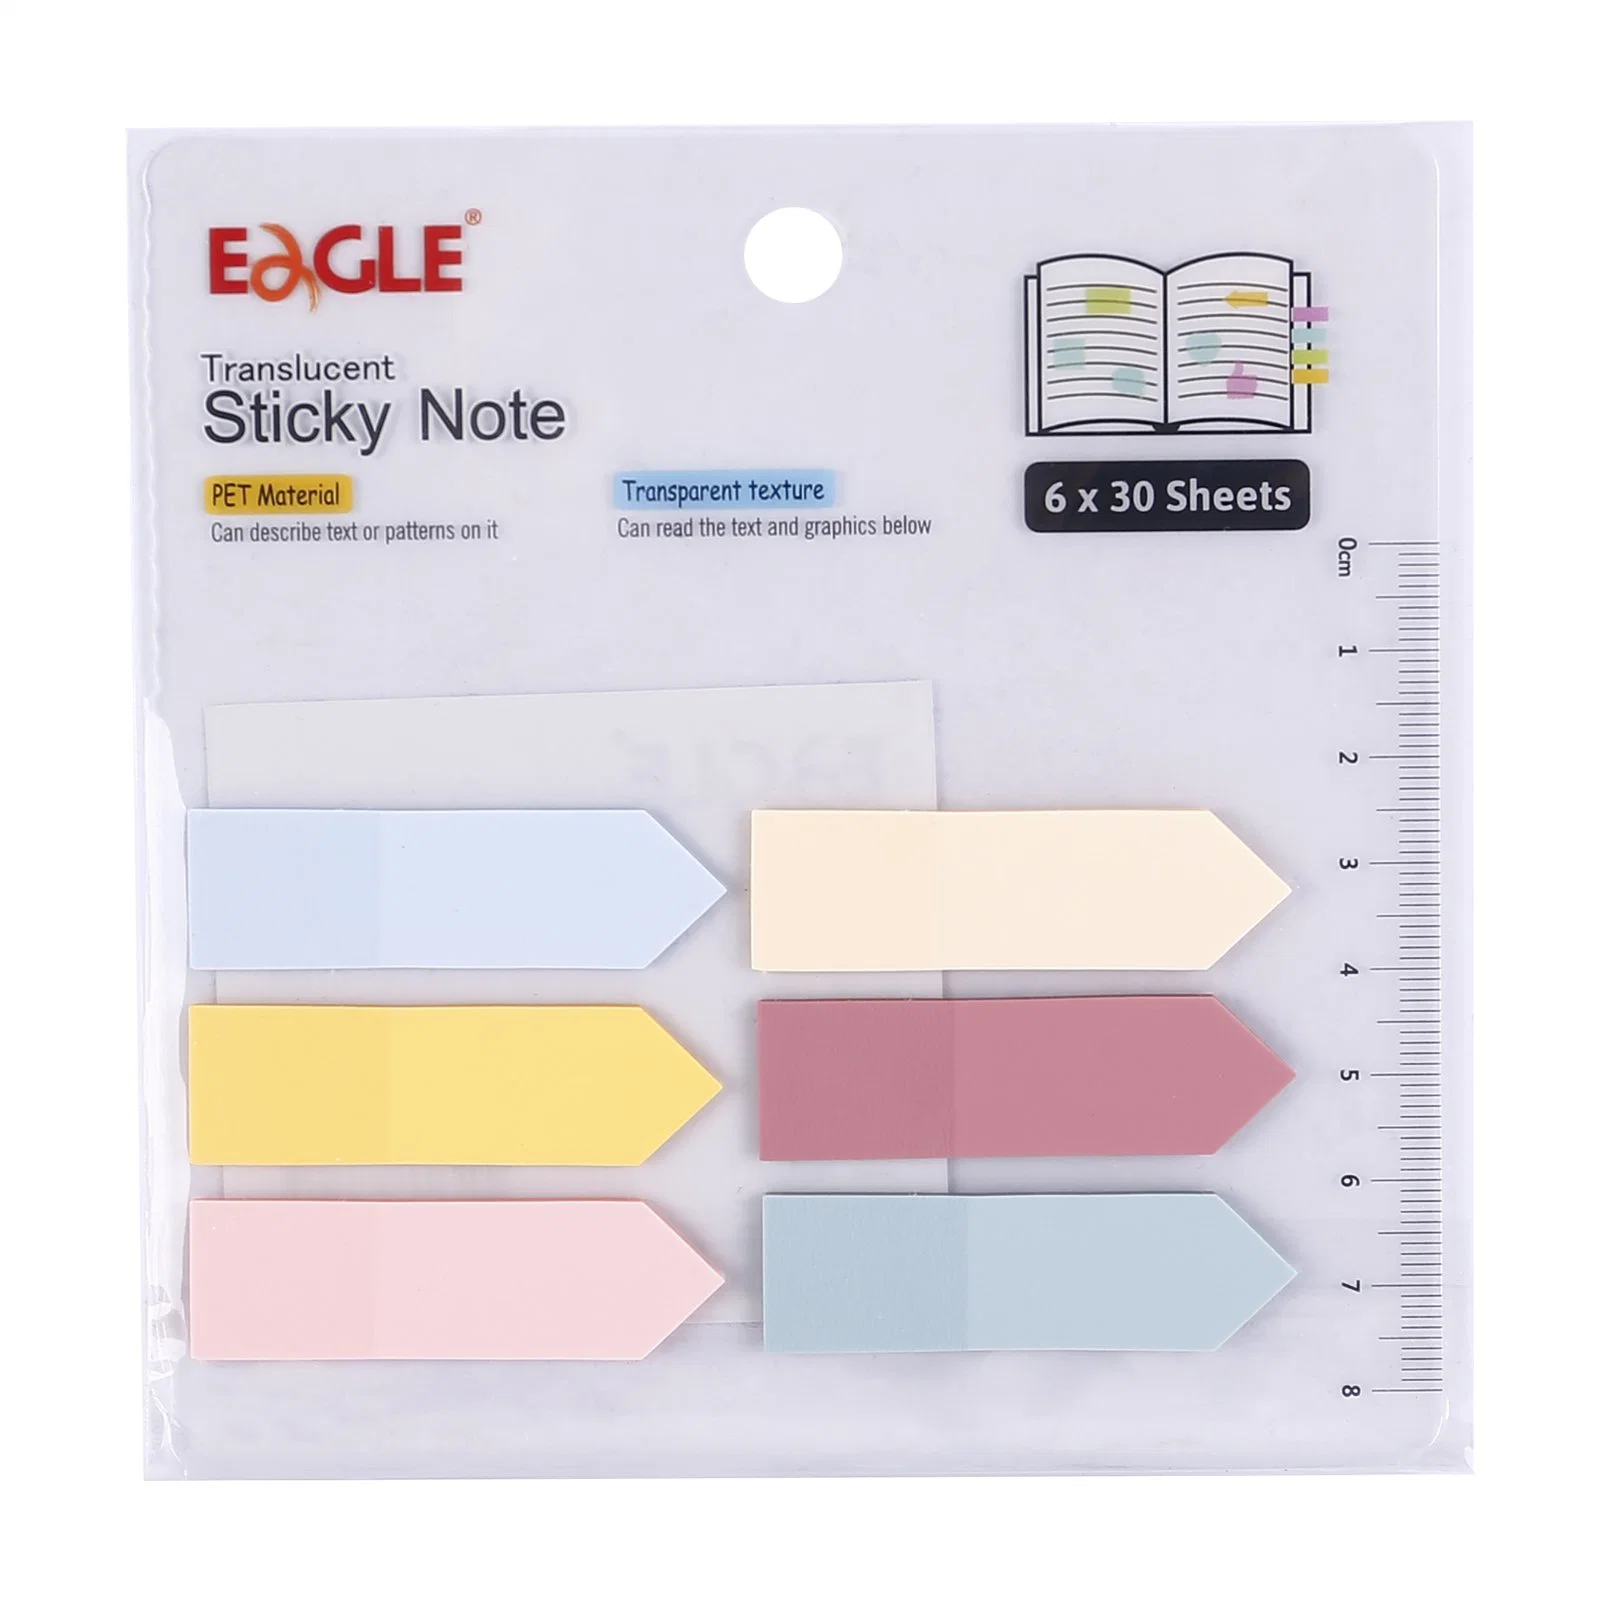 Eagle Alta calidad Sticky Notas producto 50*15mm dividir Notas para Suministros de oficina